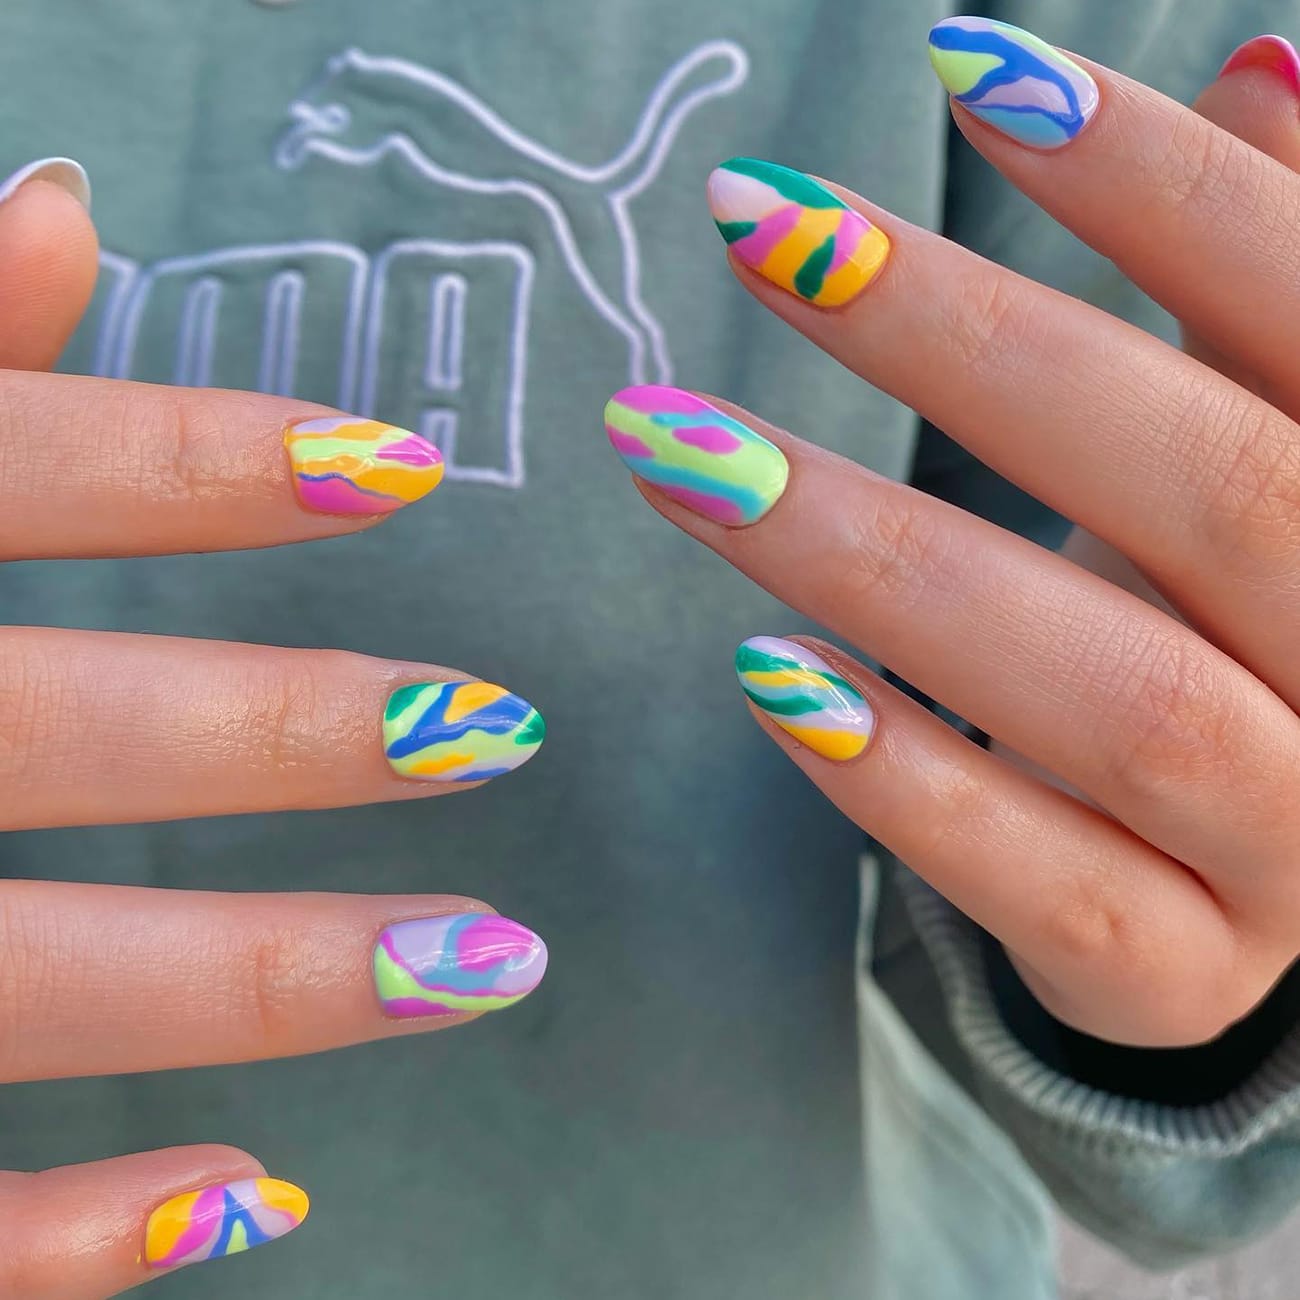 Rainbow Summer Nails